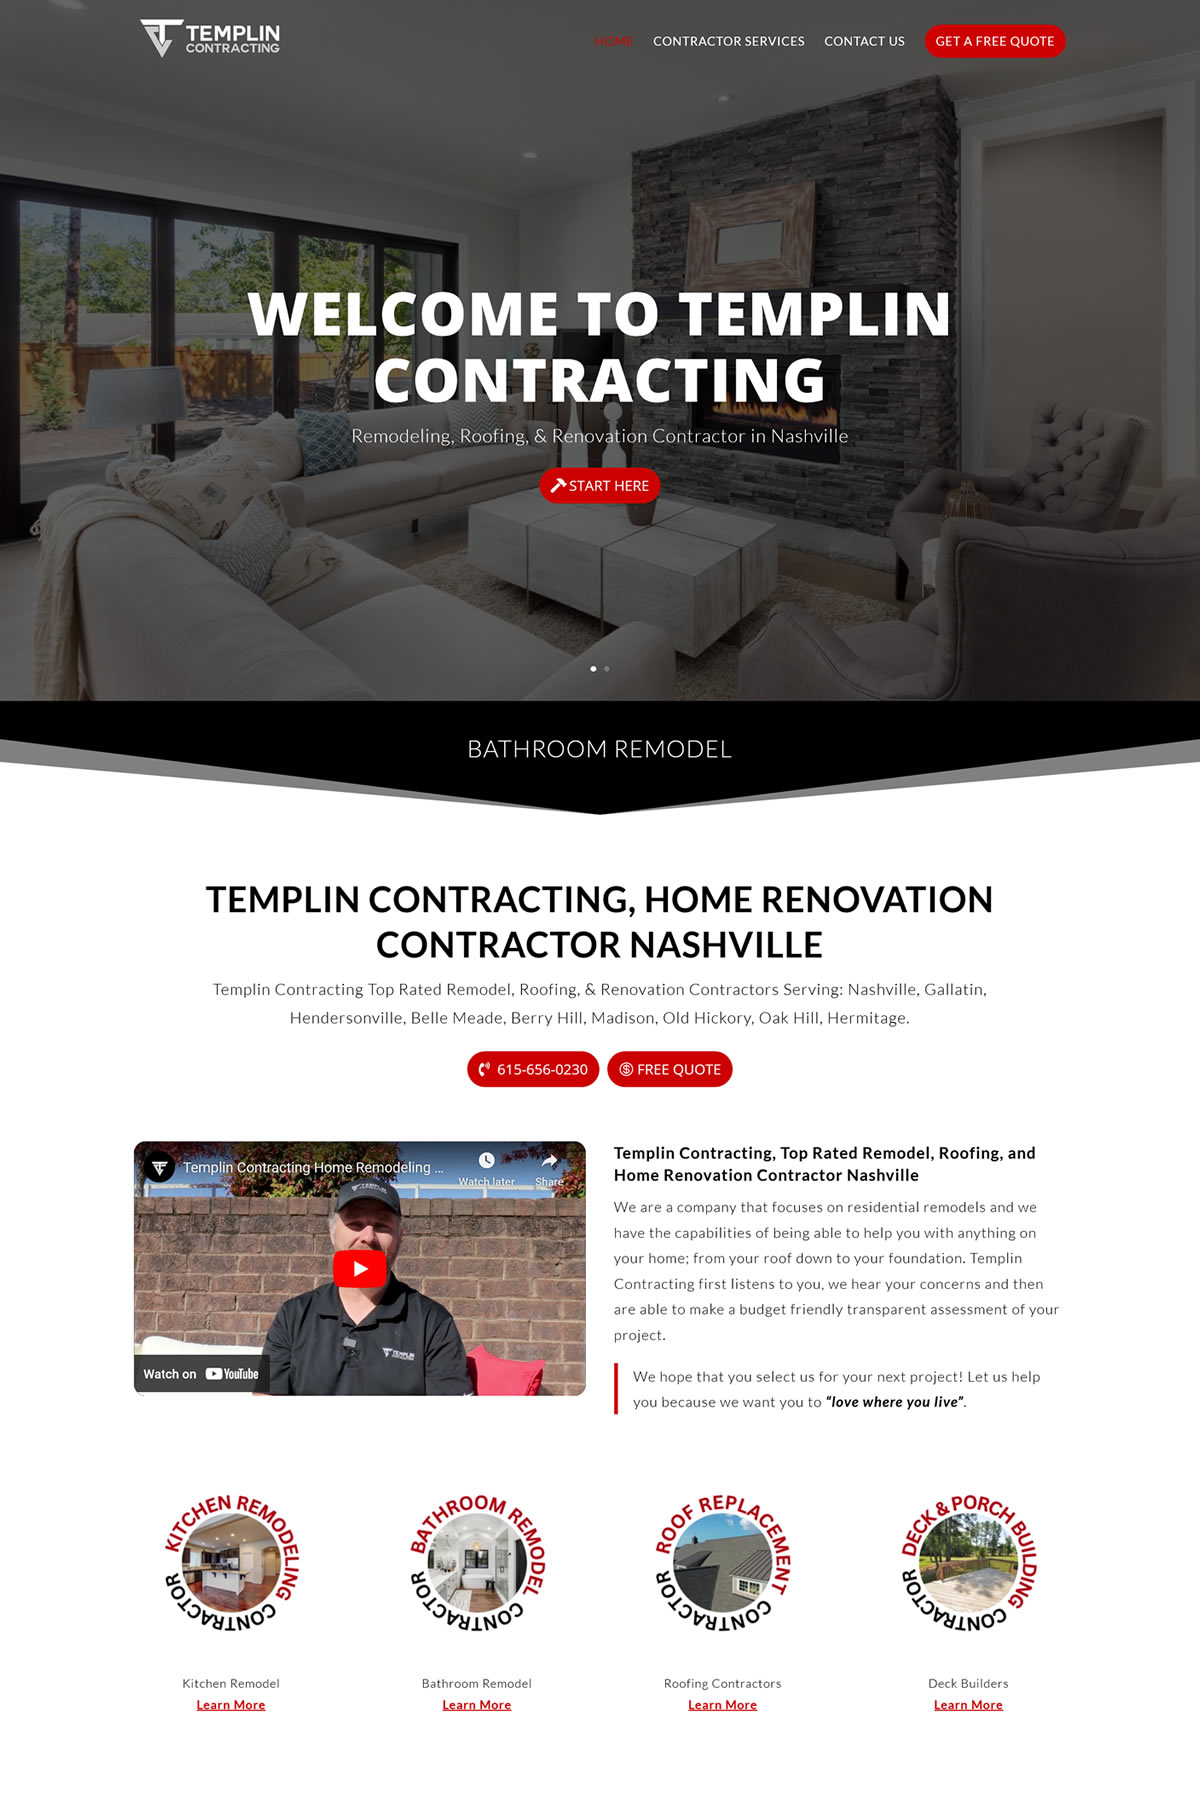 templin-contractors-in-nashville-gohooper-web-design-company